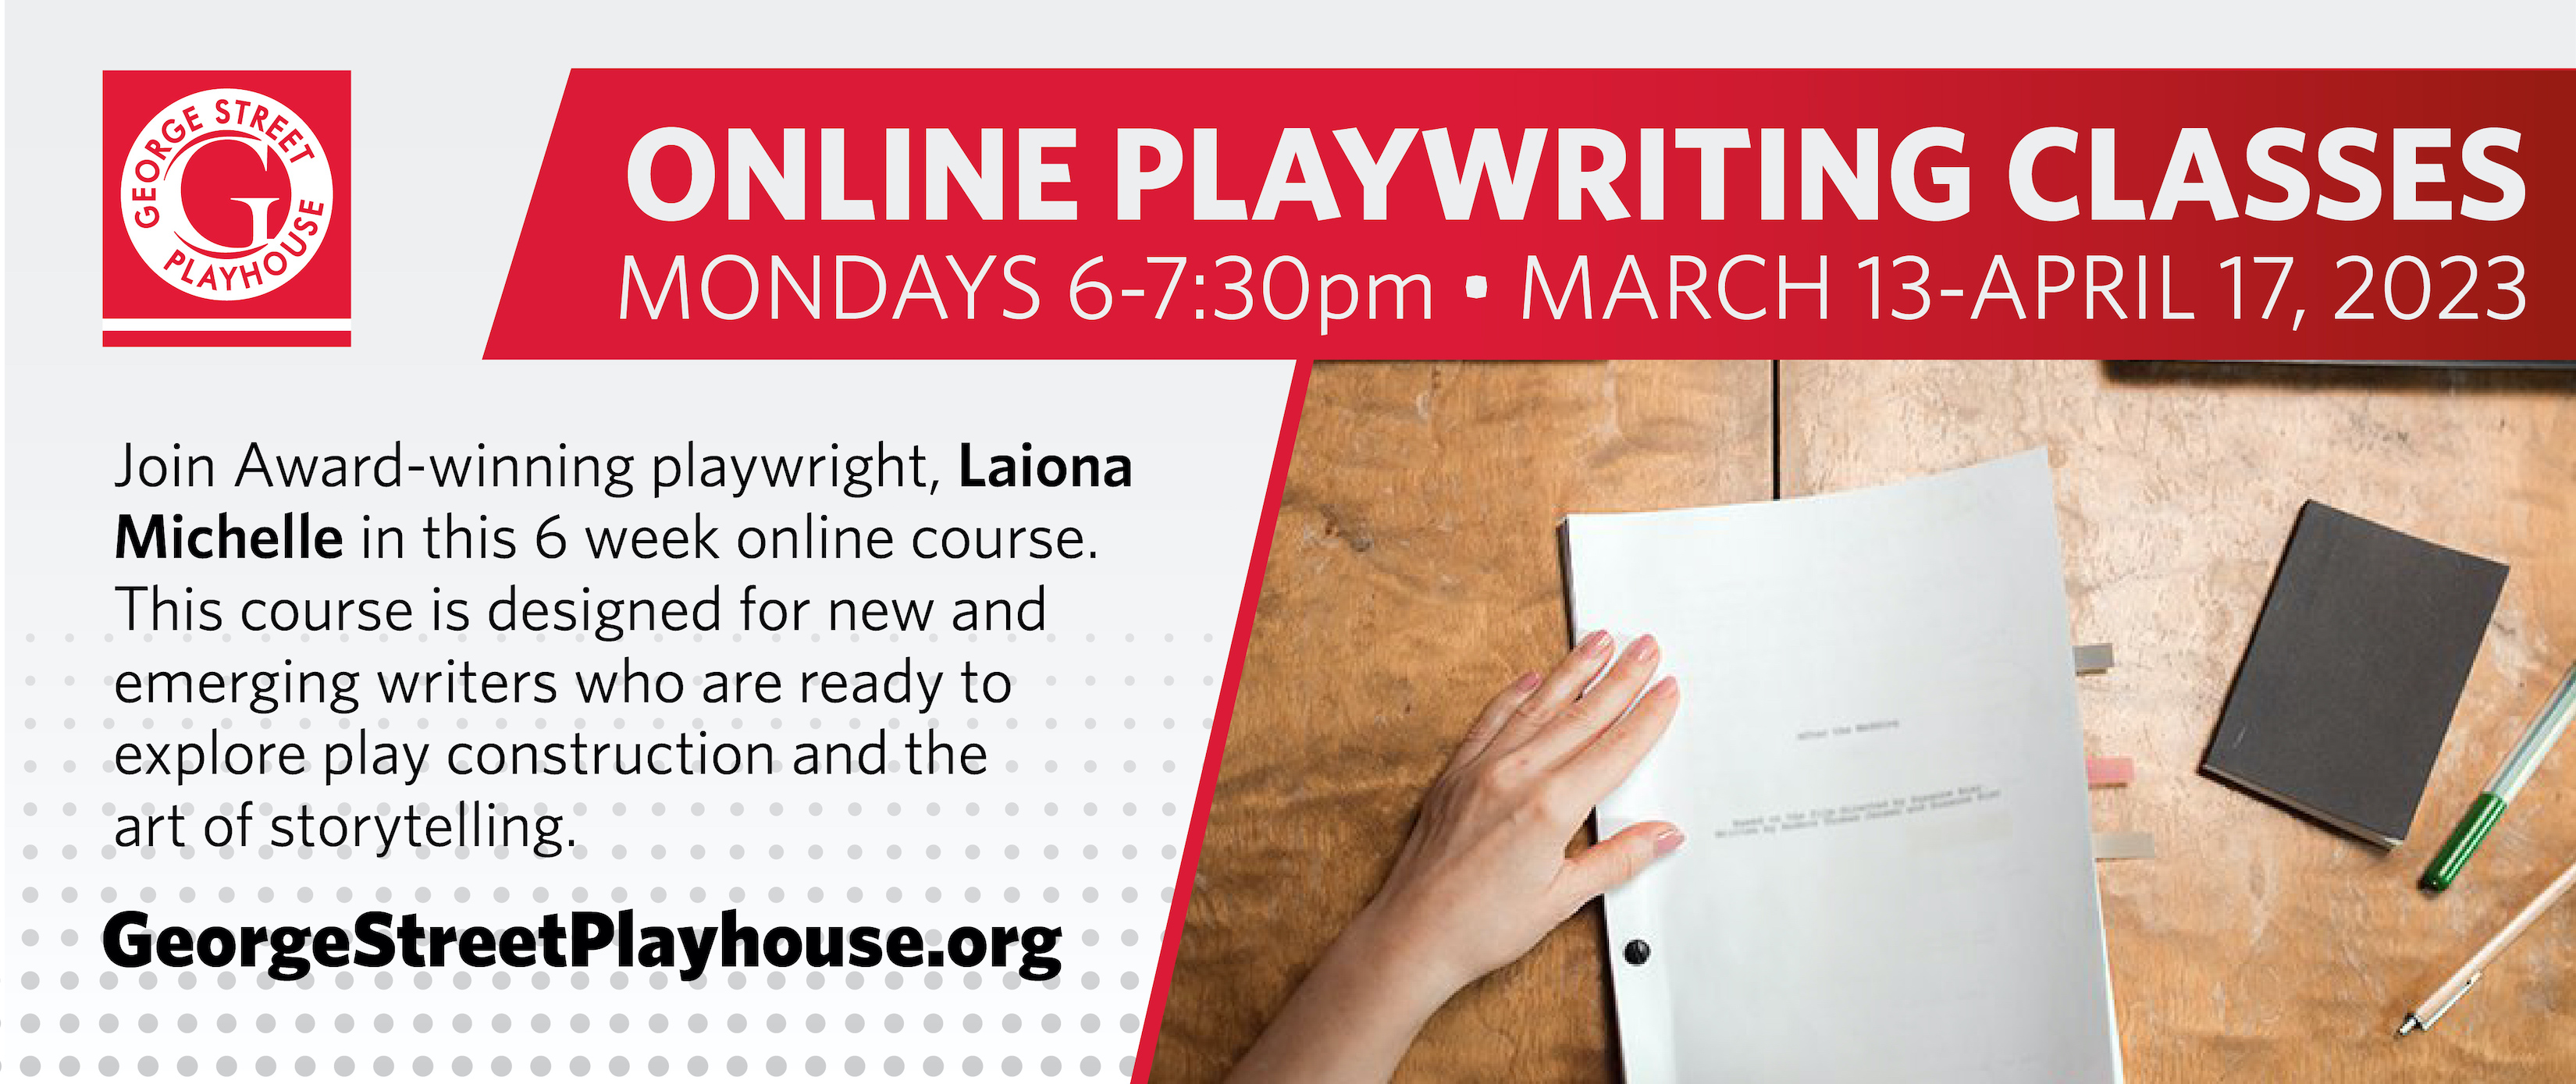 Online Playwriting Class